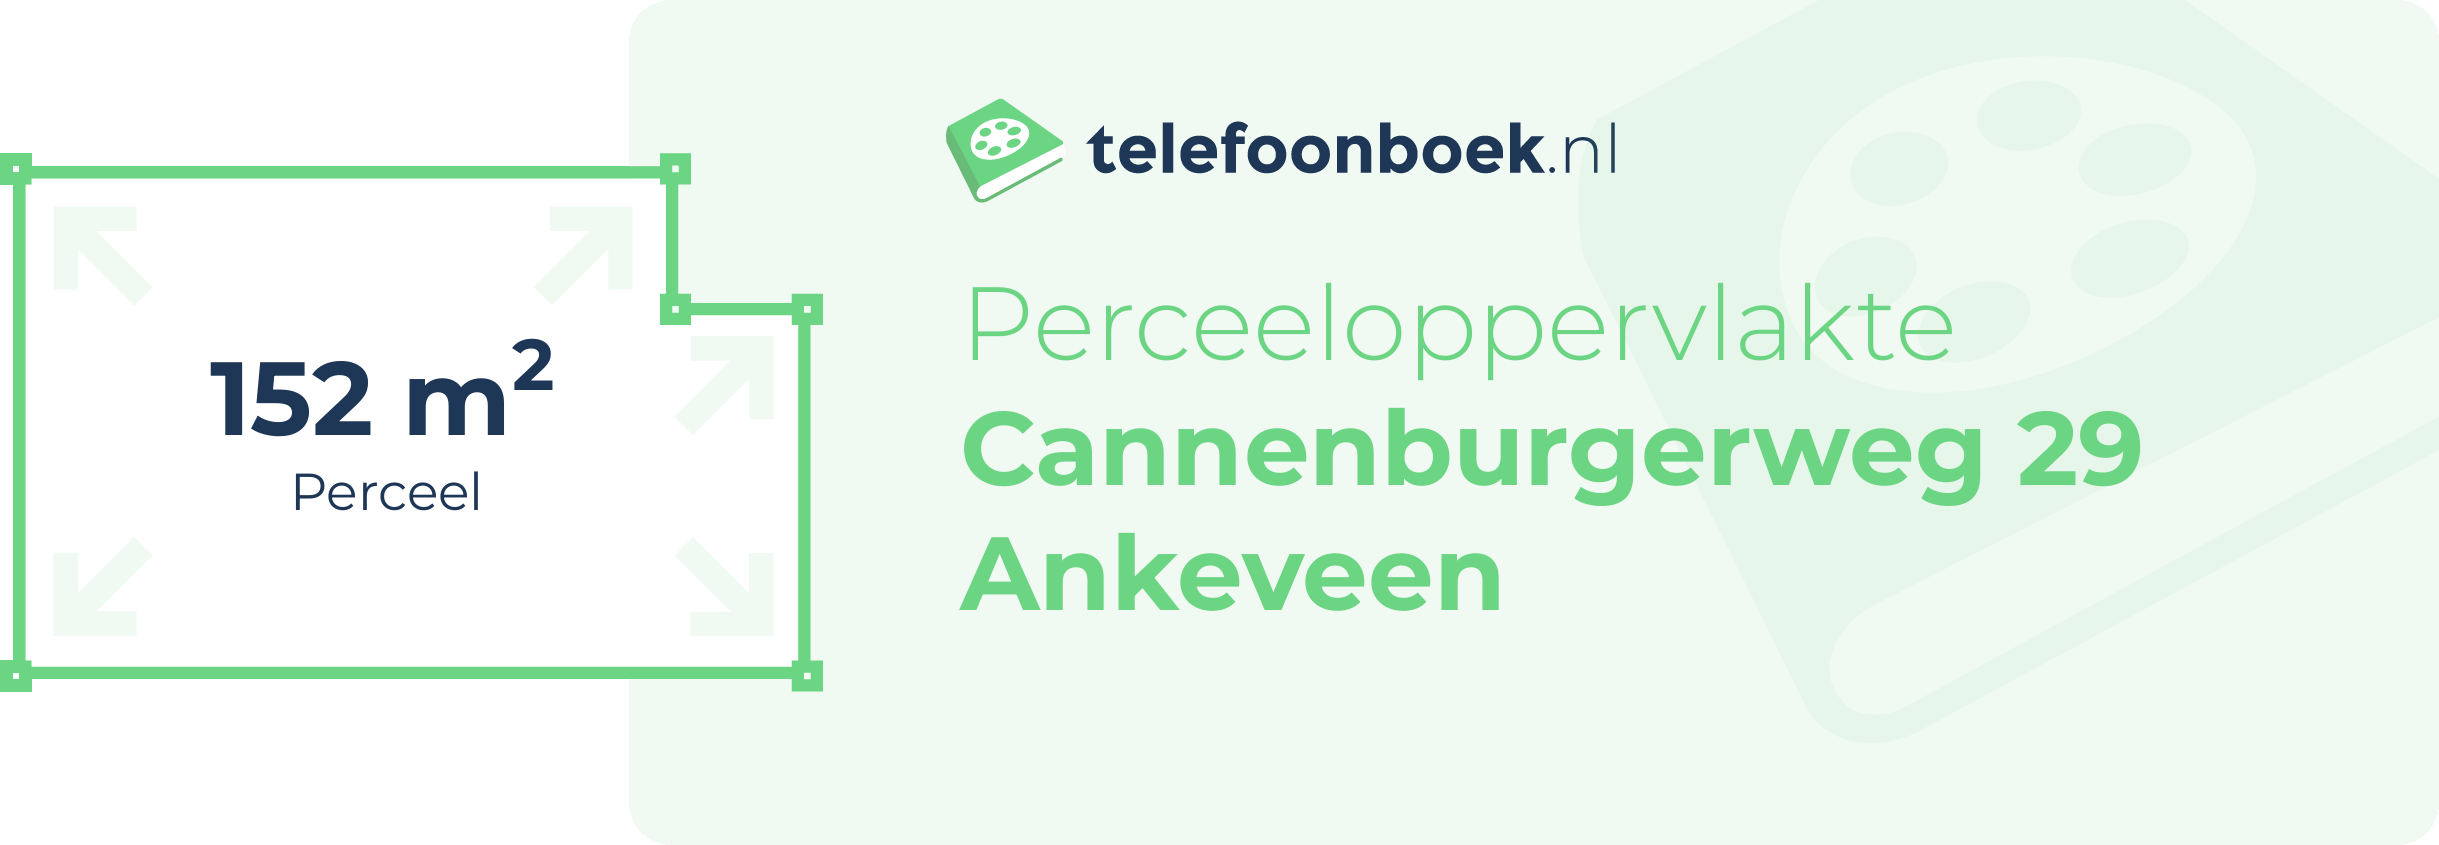 Perceeloppervlakte Cannenburgerweg 29 Ankeveen